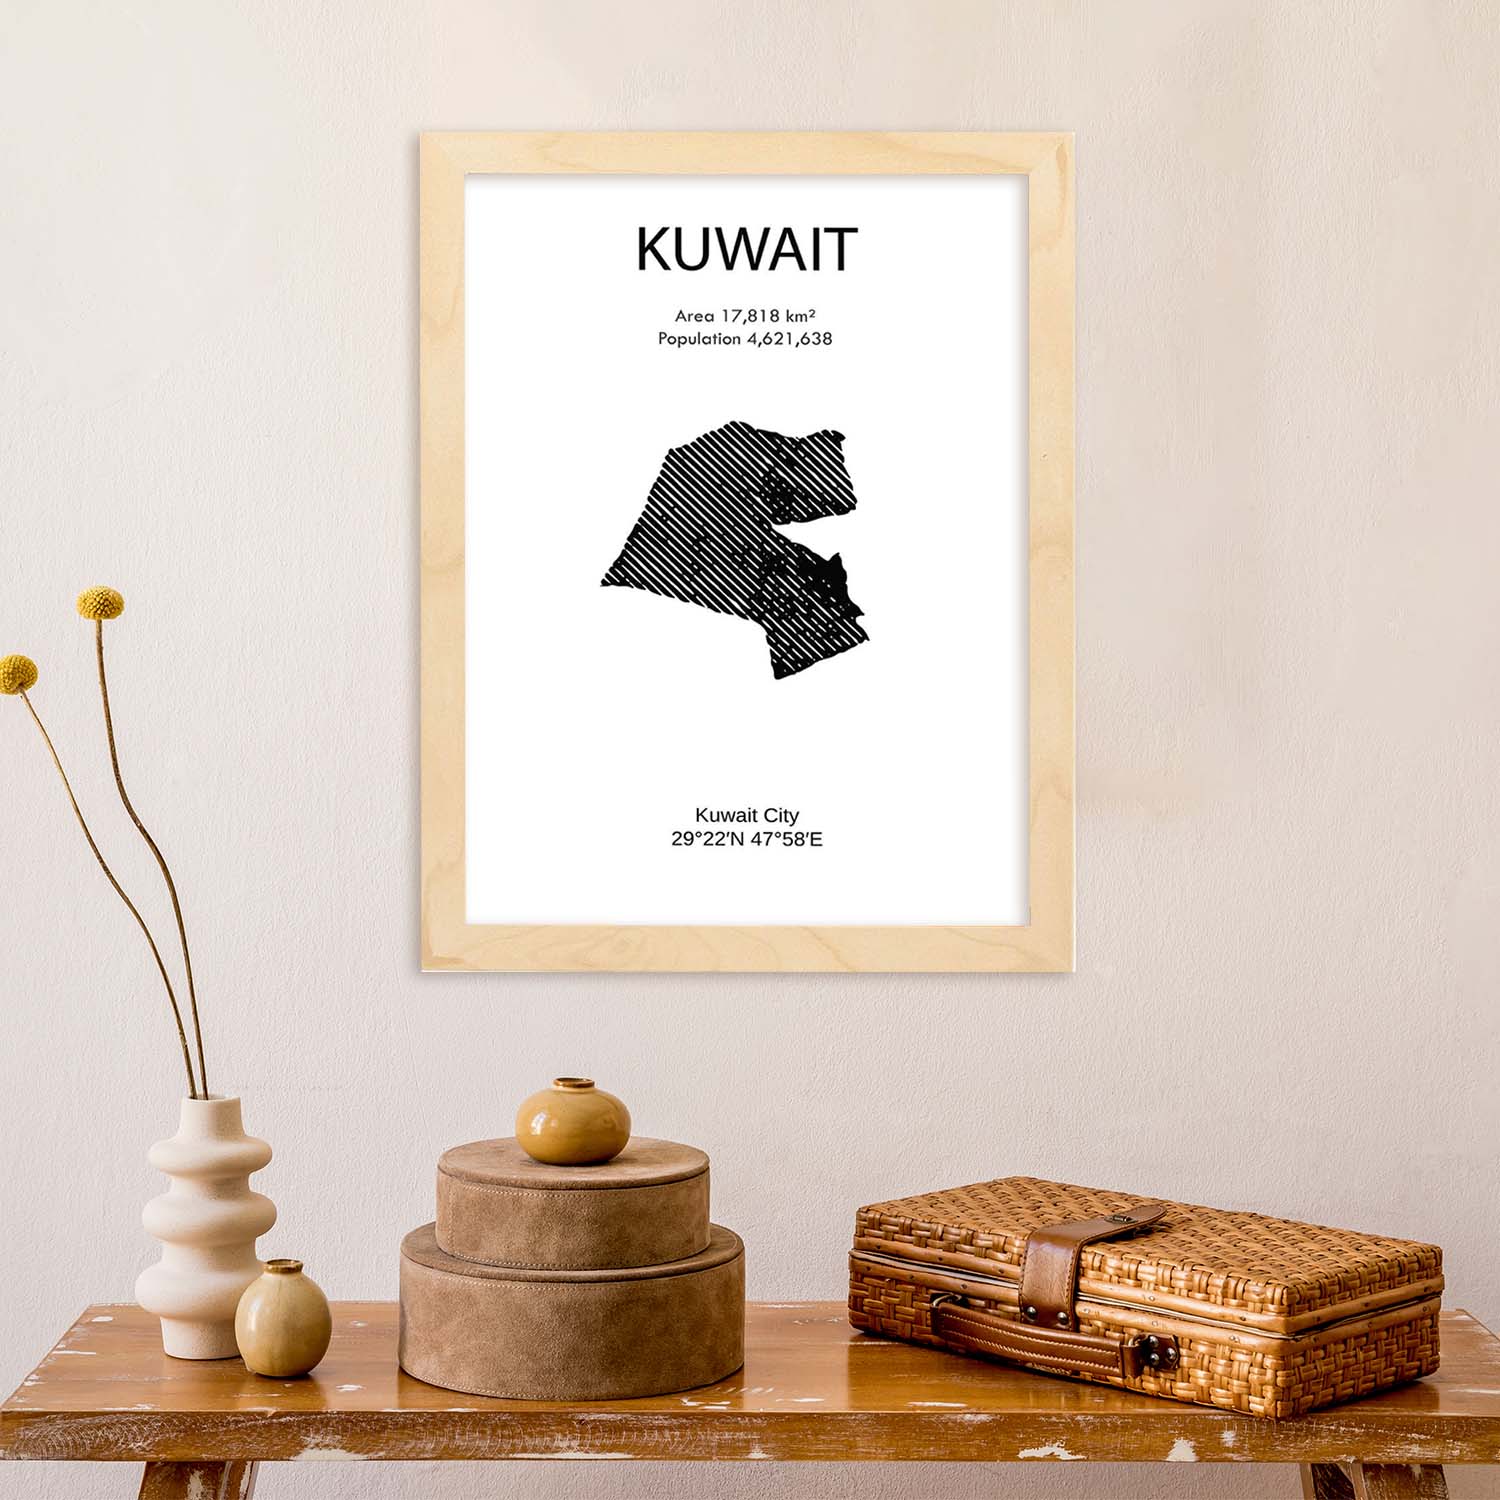 Poster de Kuwait. Láminas de paises y continentes del mundo.-Artwork-Nacnic-Nacnic Estudio SL